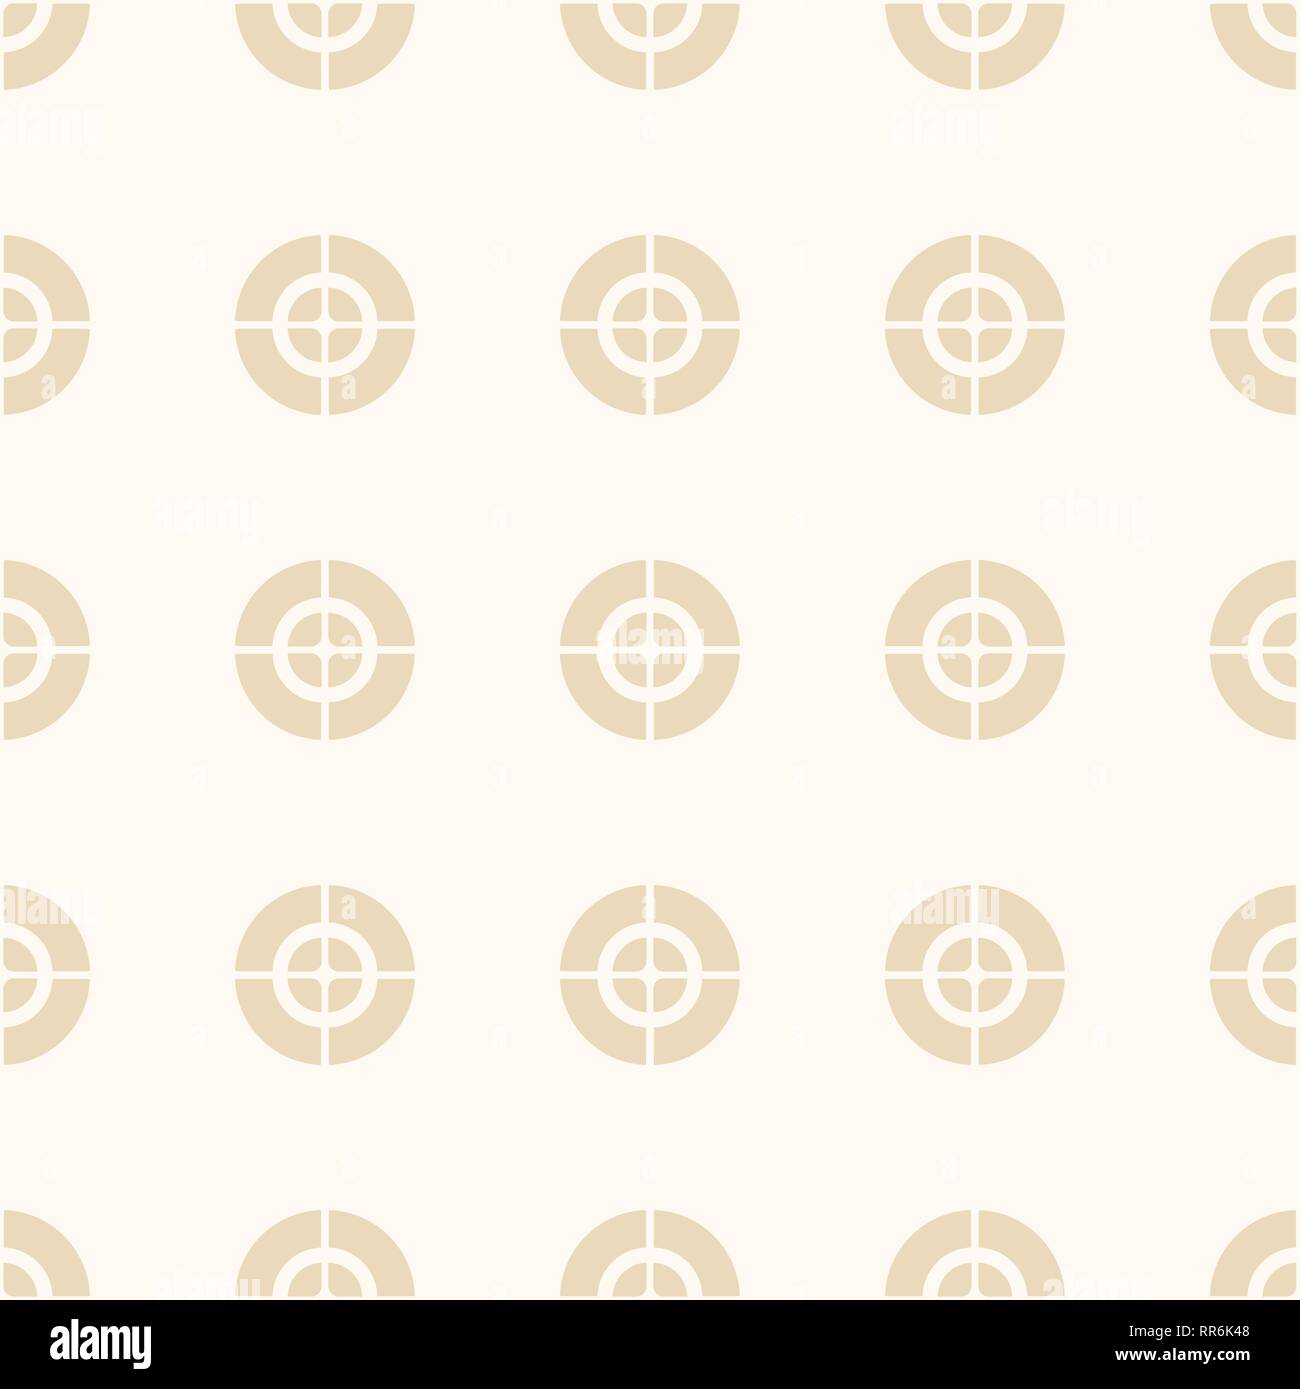 Crosshair, aim, optical sight pattern. Simple illustration of crosshairs, sights, sniper symbols. Flat vector illustration. Stock Vector